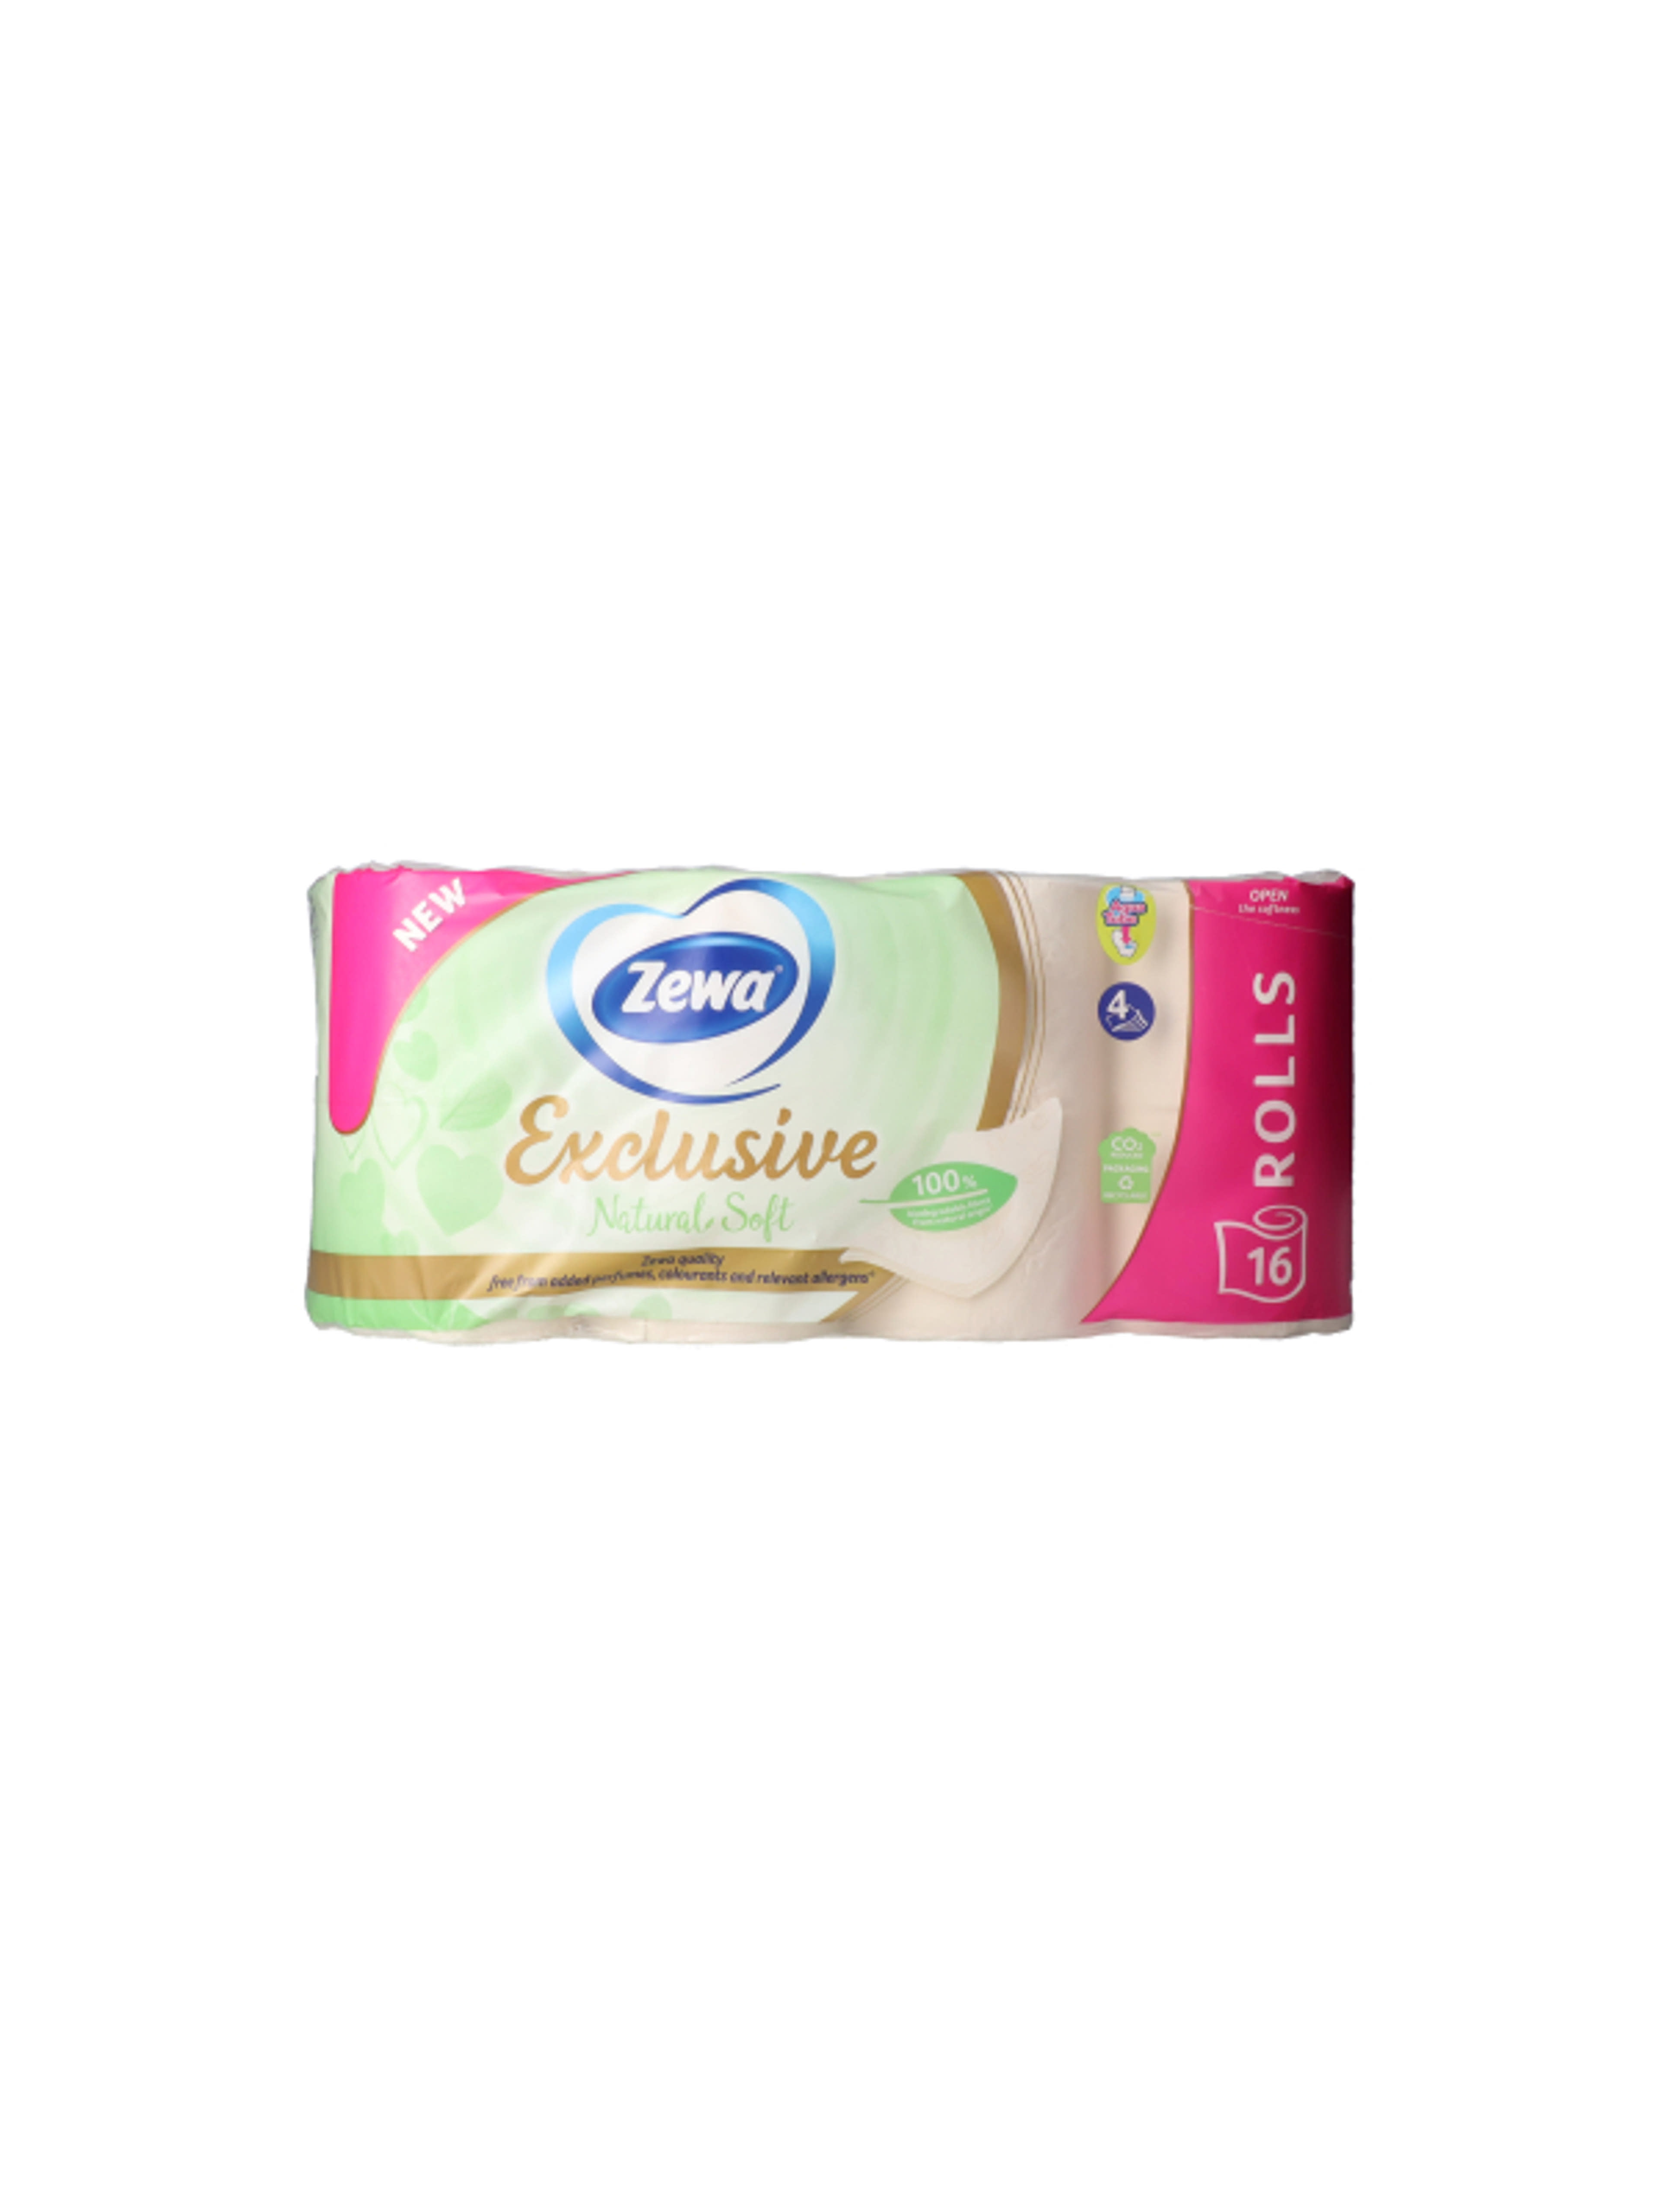 Zewa Exclusive Natural 4 rétegű toalettpapír - 16 db